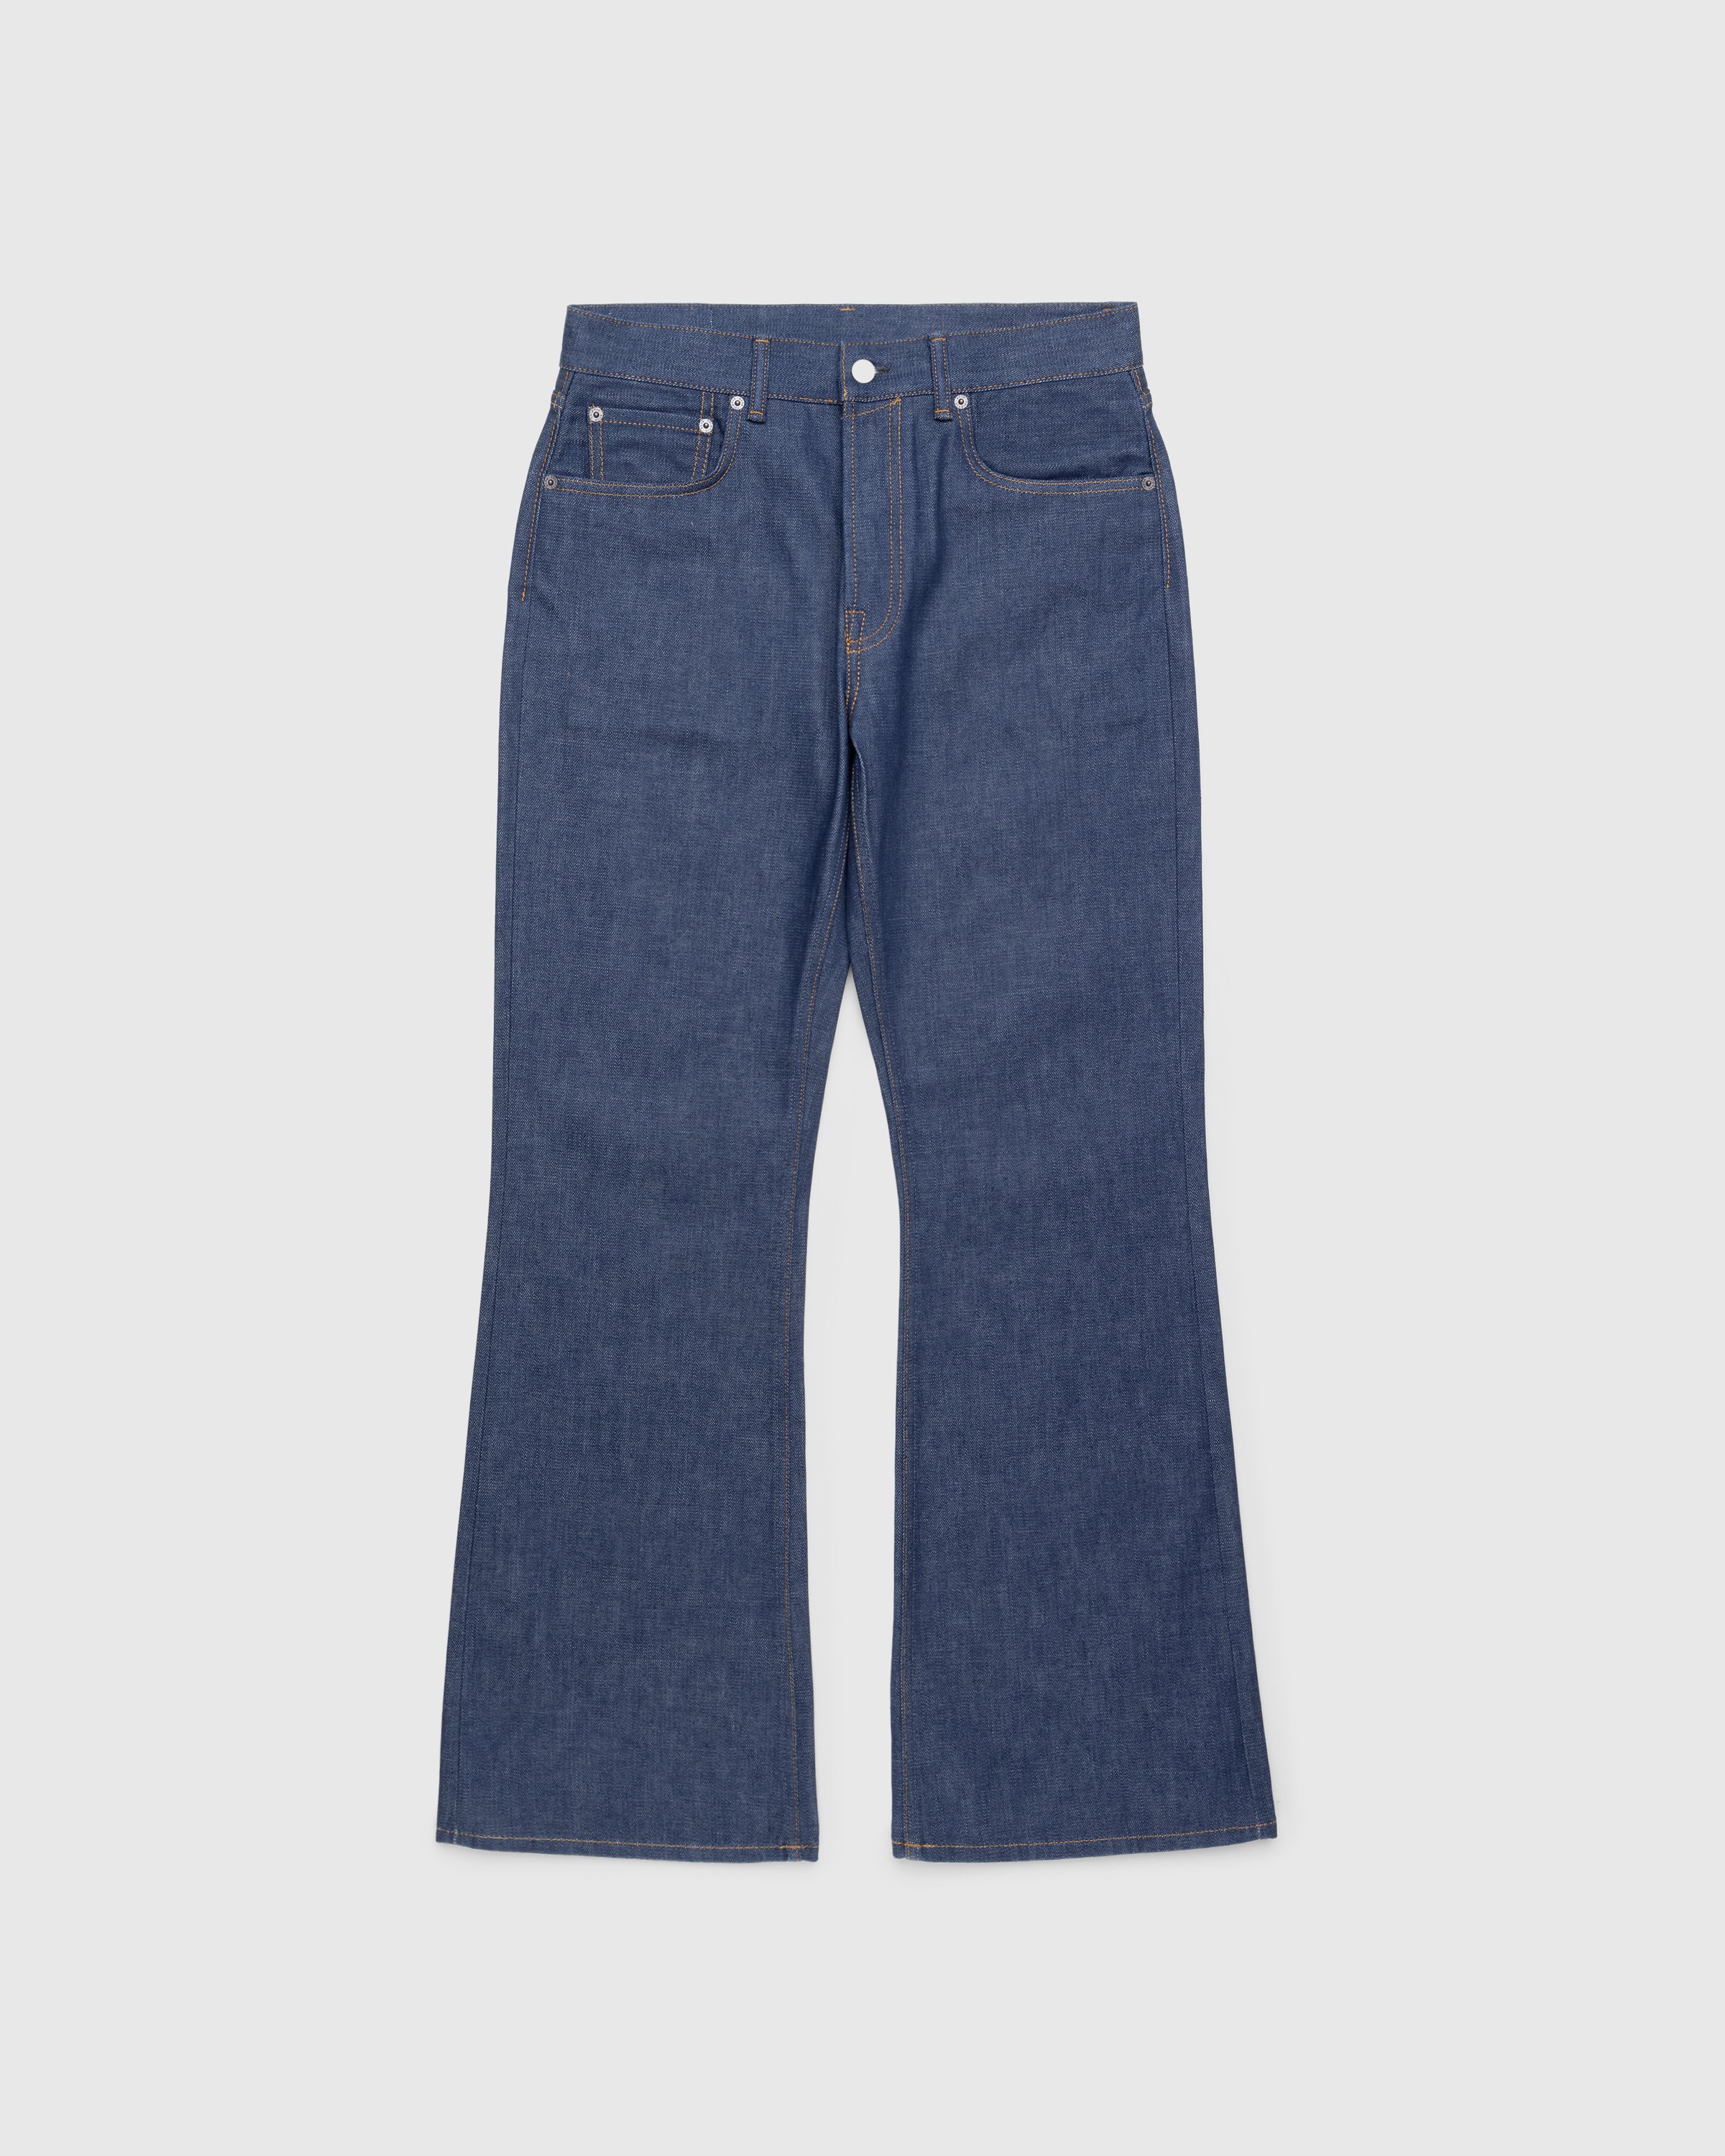 Acne Studios - Regular Fit Jeans 1992 Indigo Blue - Clothing - Blue - Image 1